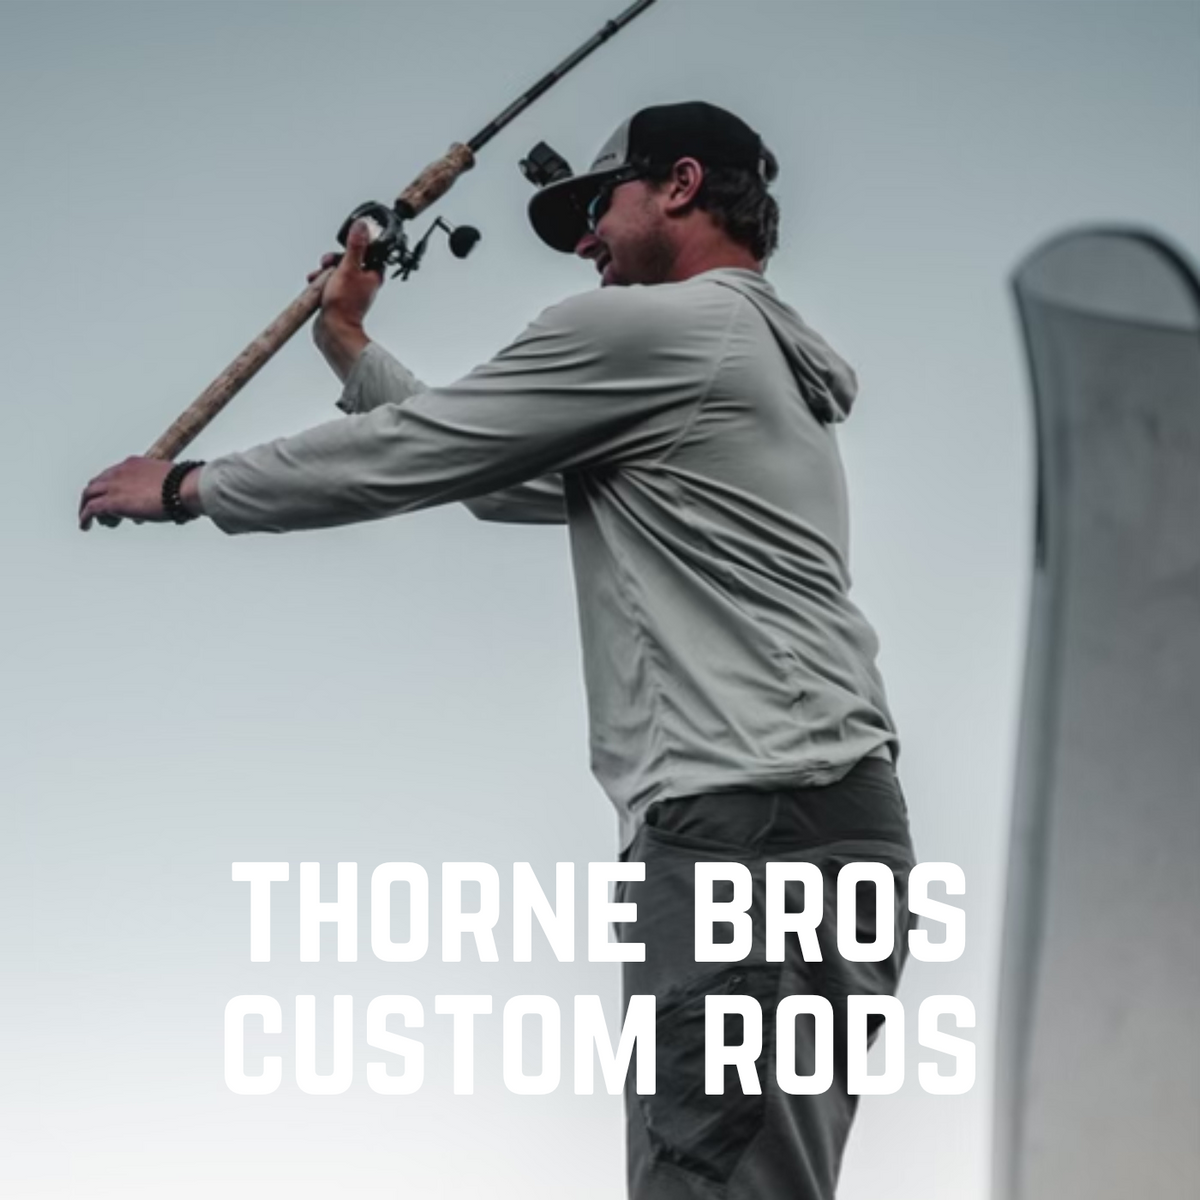 Thorne Bros Custom Rod and Tackle